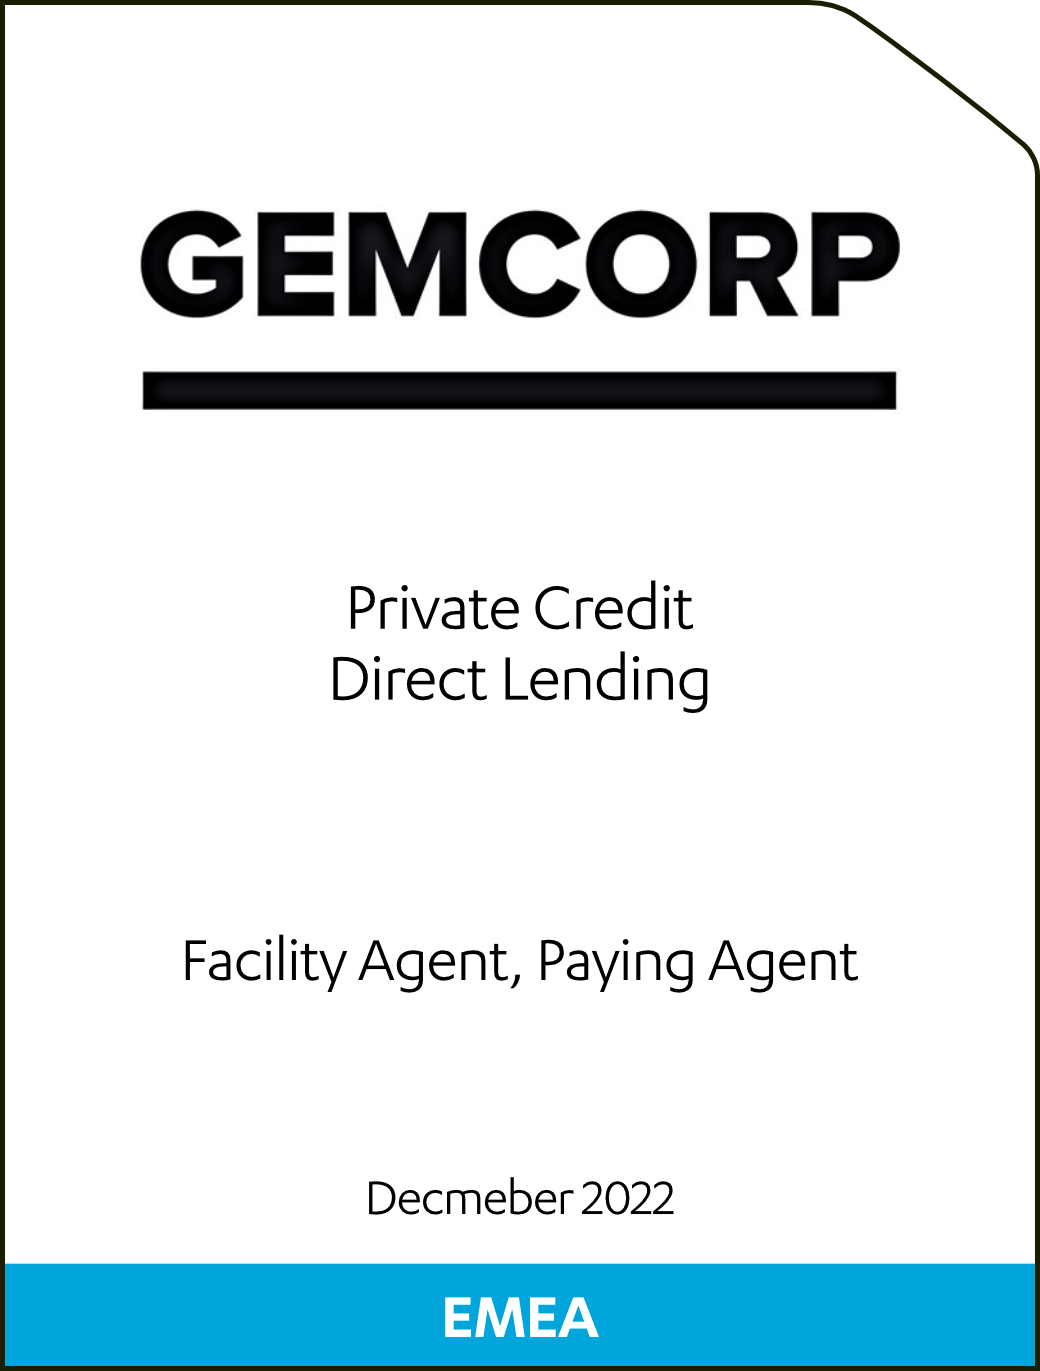 GEM Corp